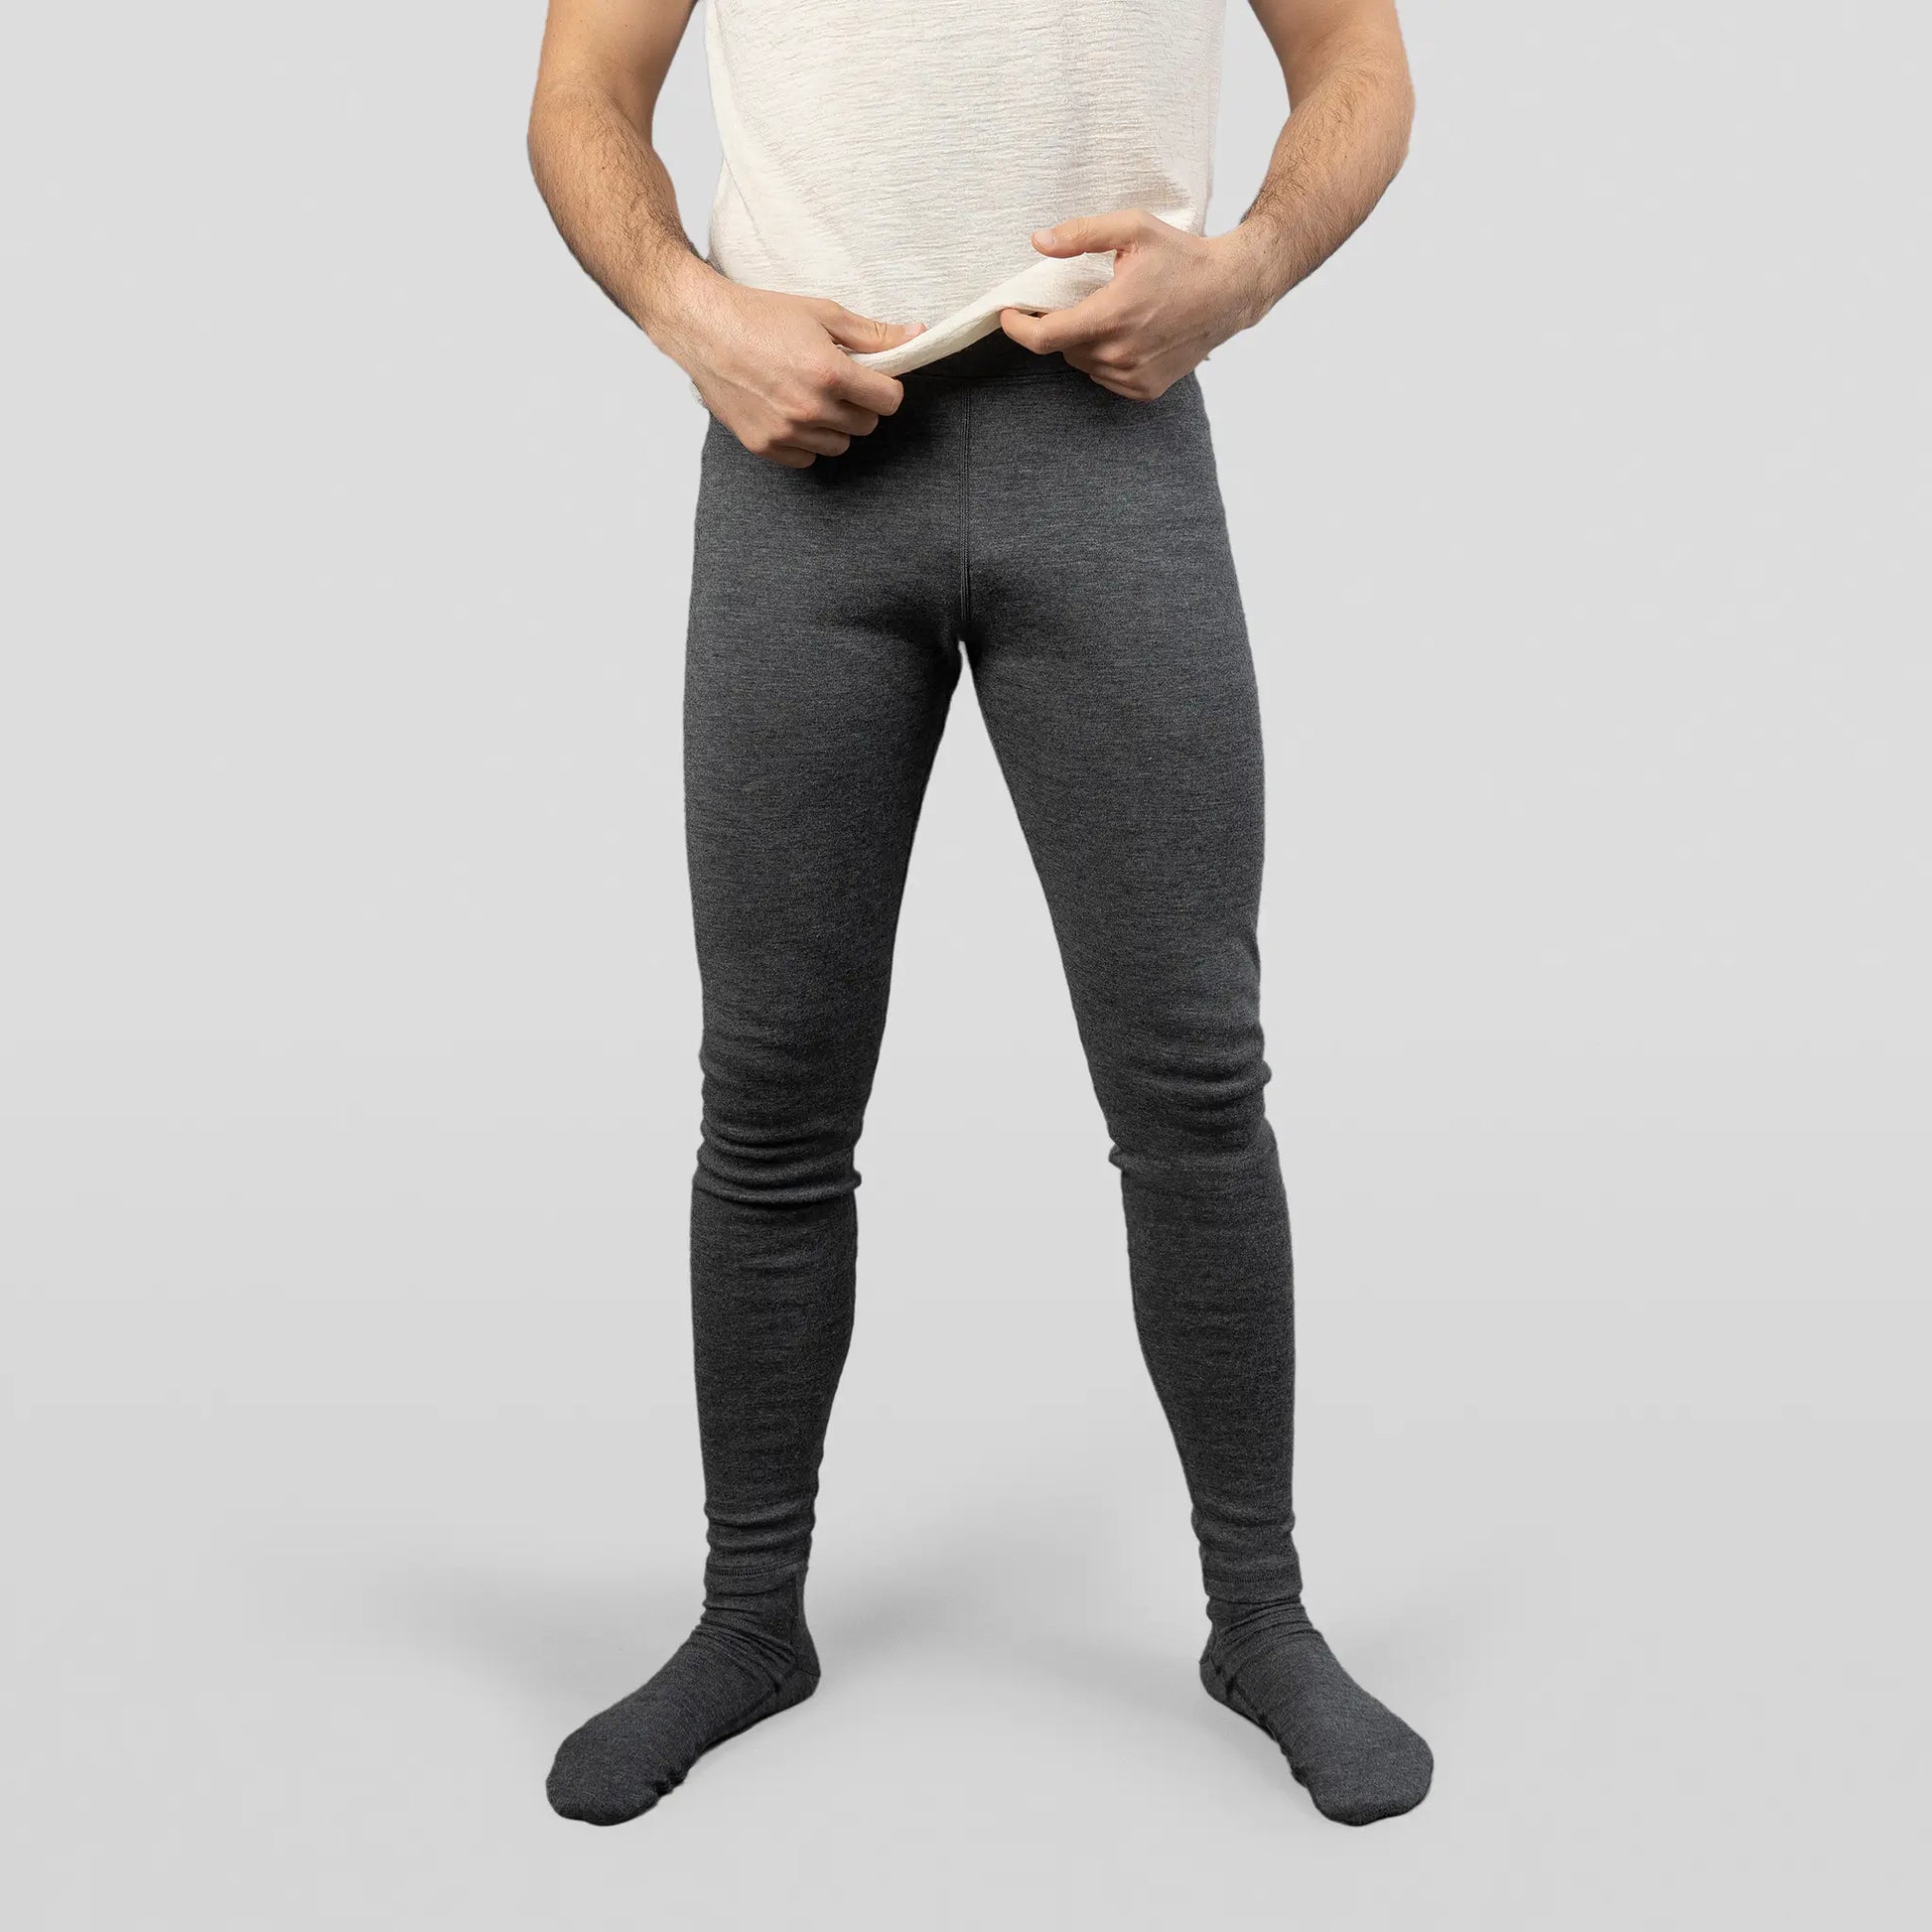 mens plastic free leggings lightweight color gray